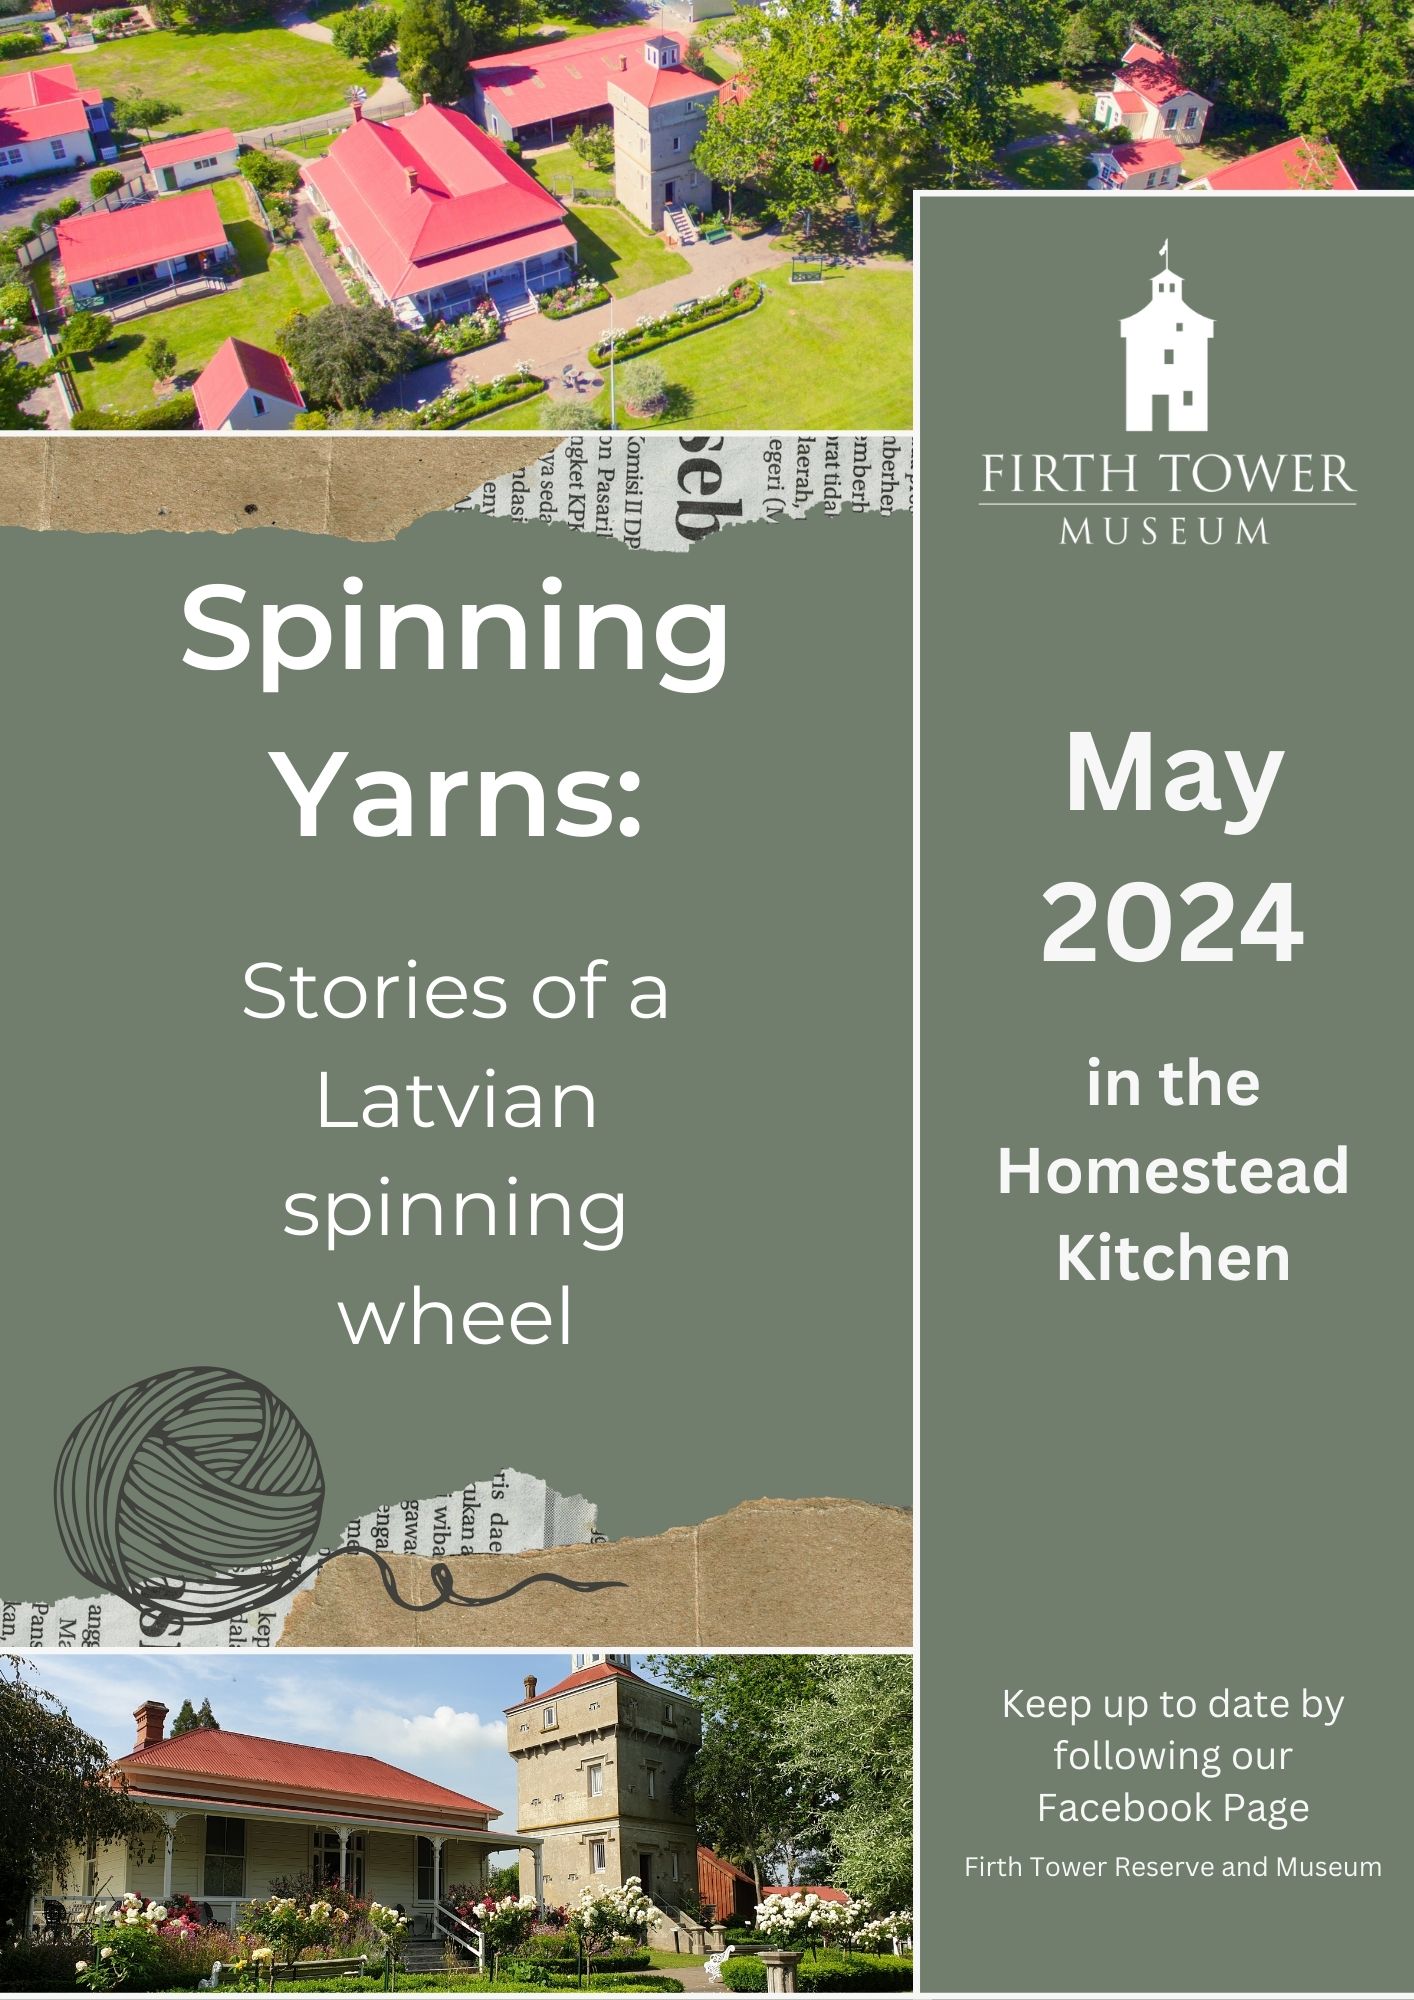 Spinning yarns